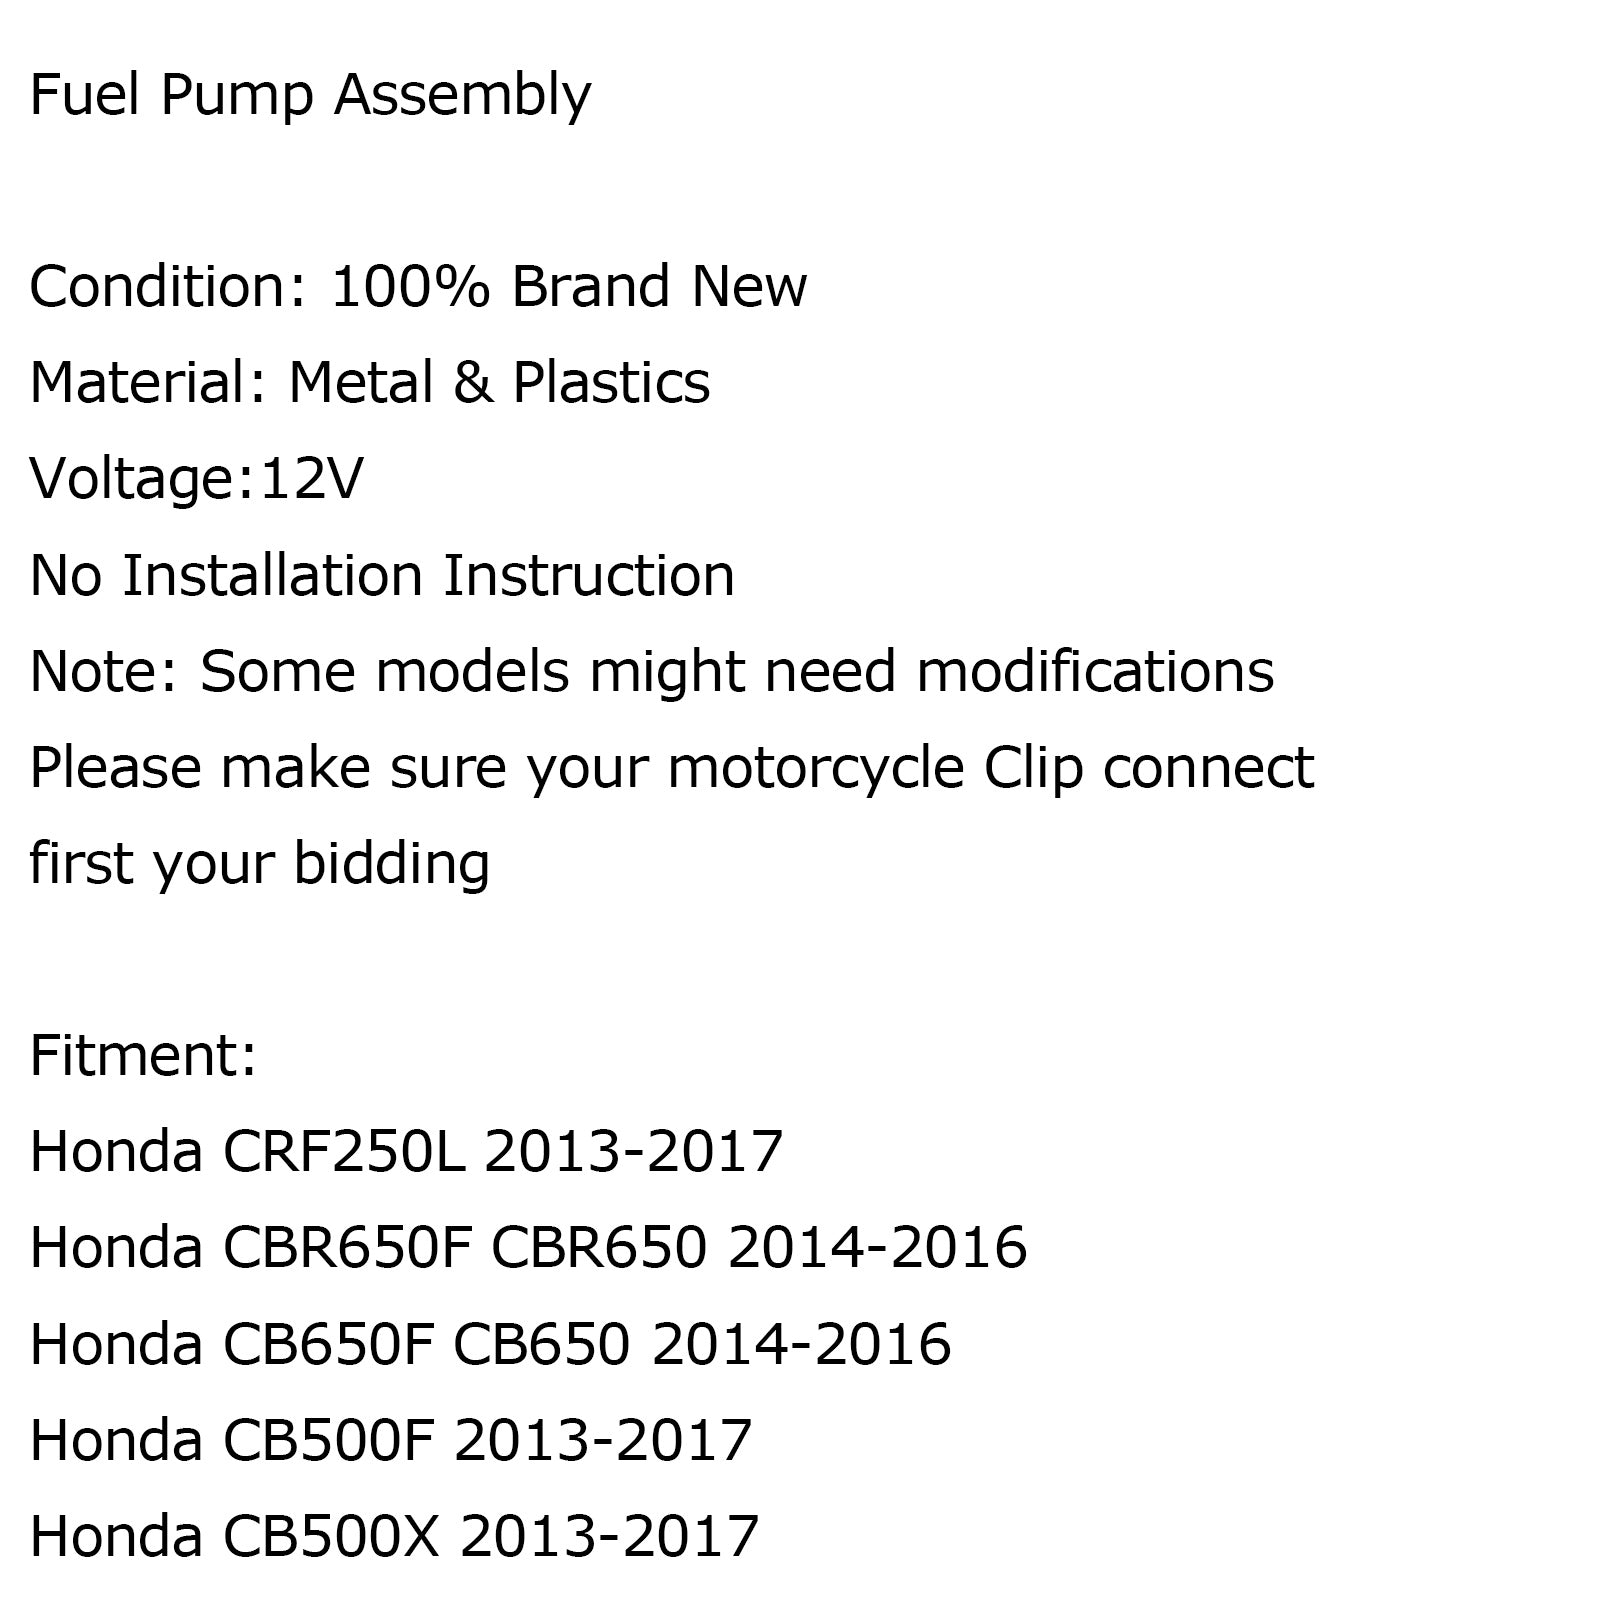 Pompa del carburante per Honda CB500F CBR 500R 600R CRF250 NC750 CRF1000 Africa Twin